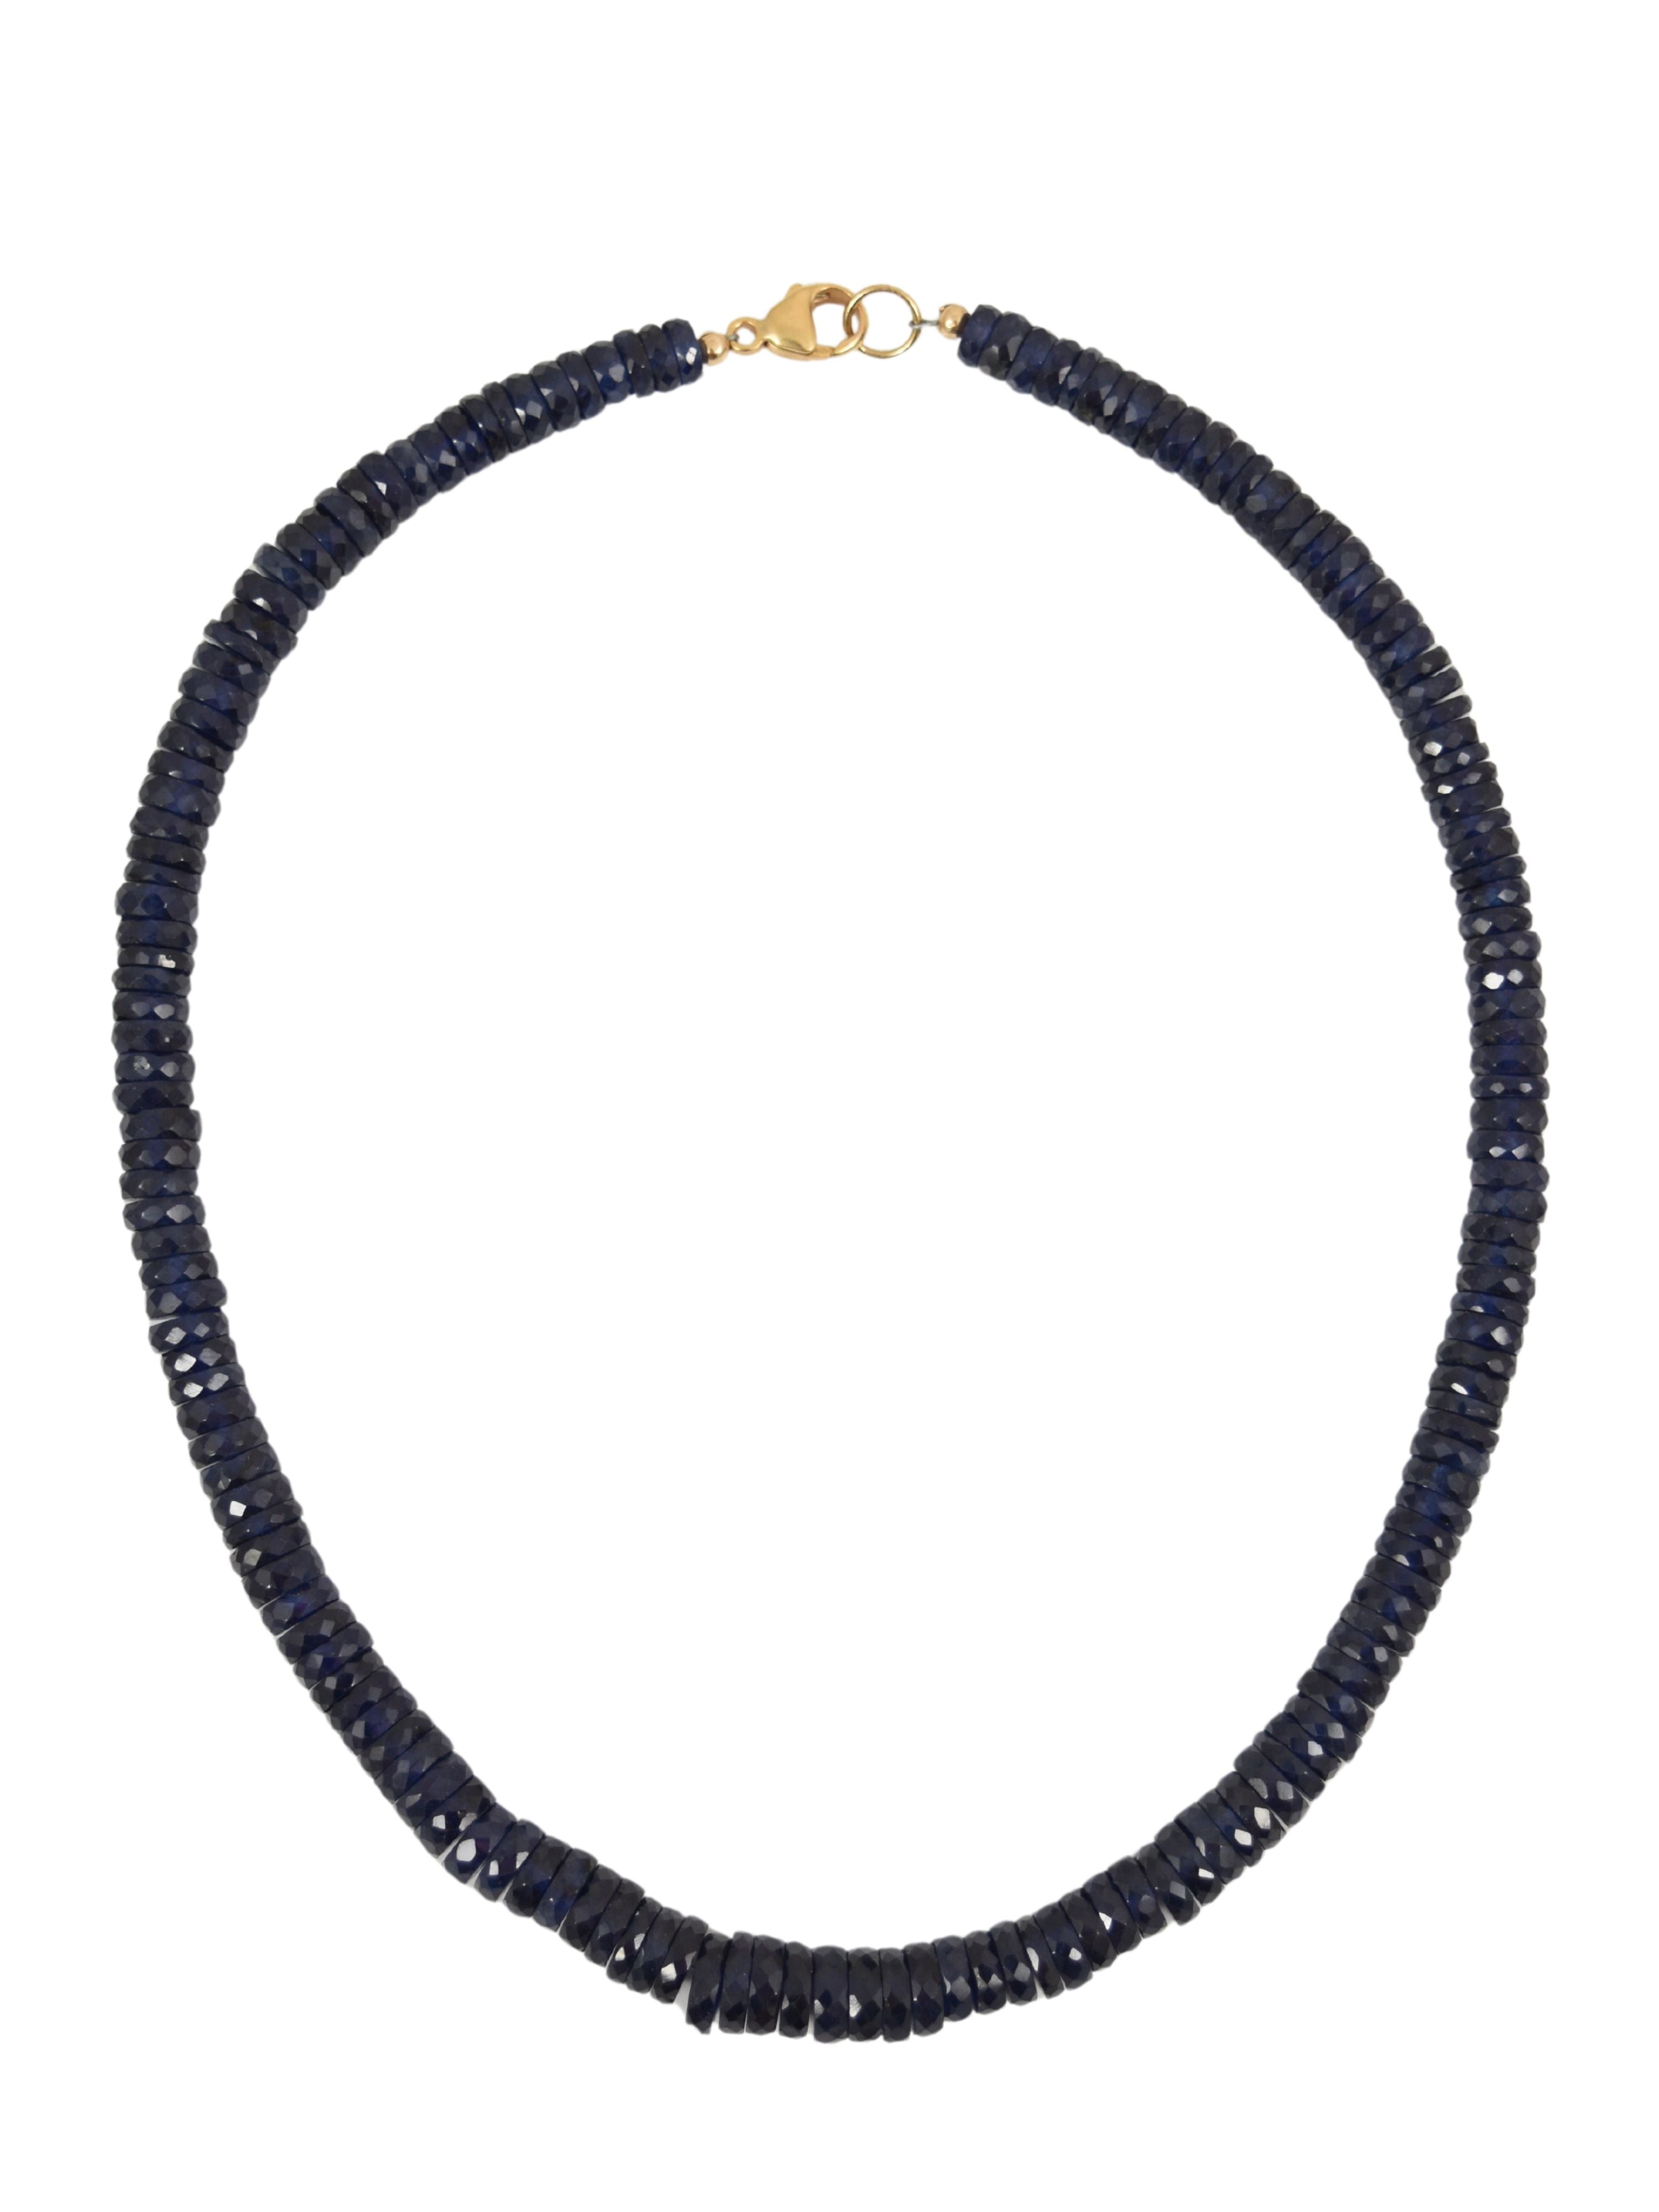 Brandy Blue Sapphire Necklace